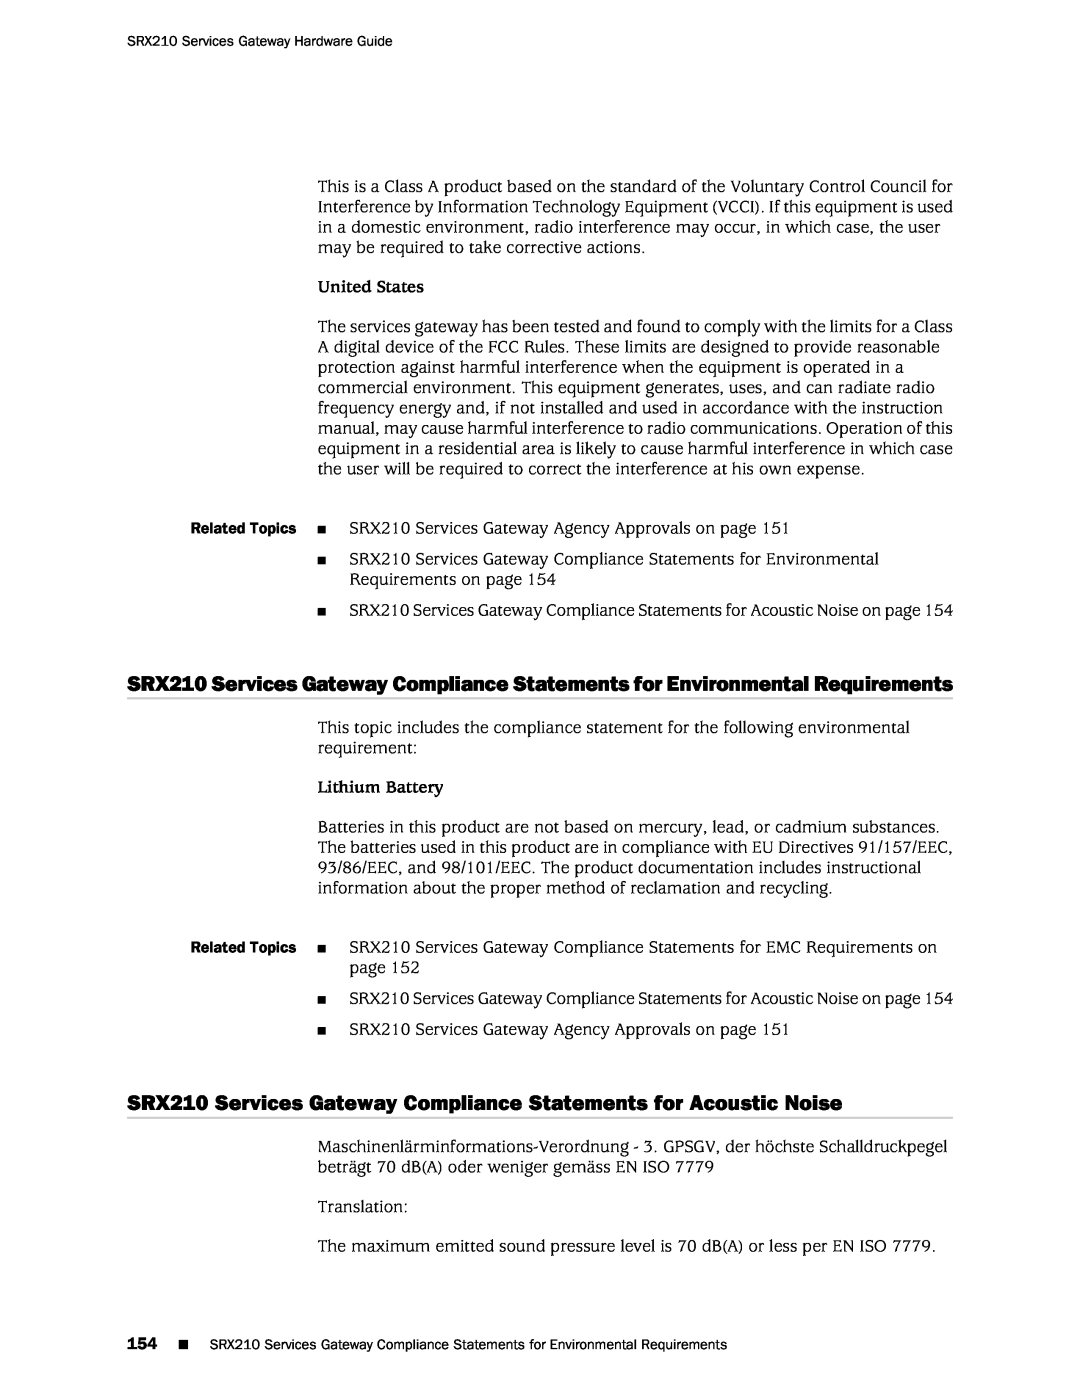 Juniper Networks SRX 210 SRX210 Services Gateway Compliance Statements for Acoustic Noise, Lithium Battery, United States 